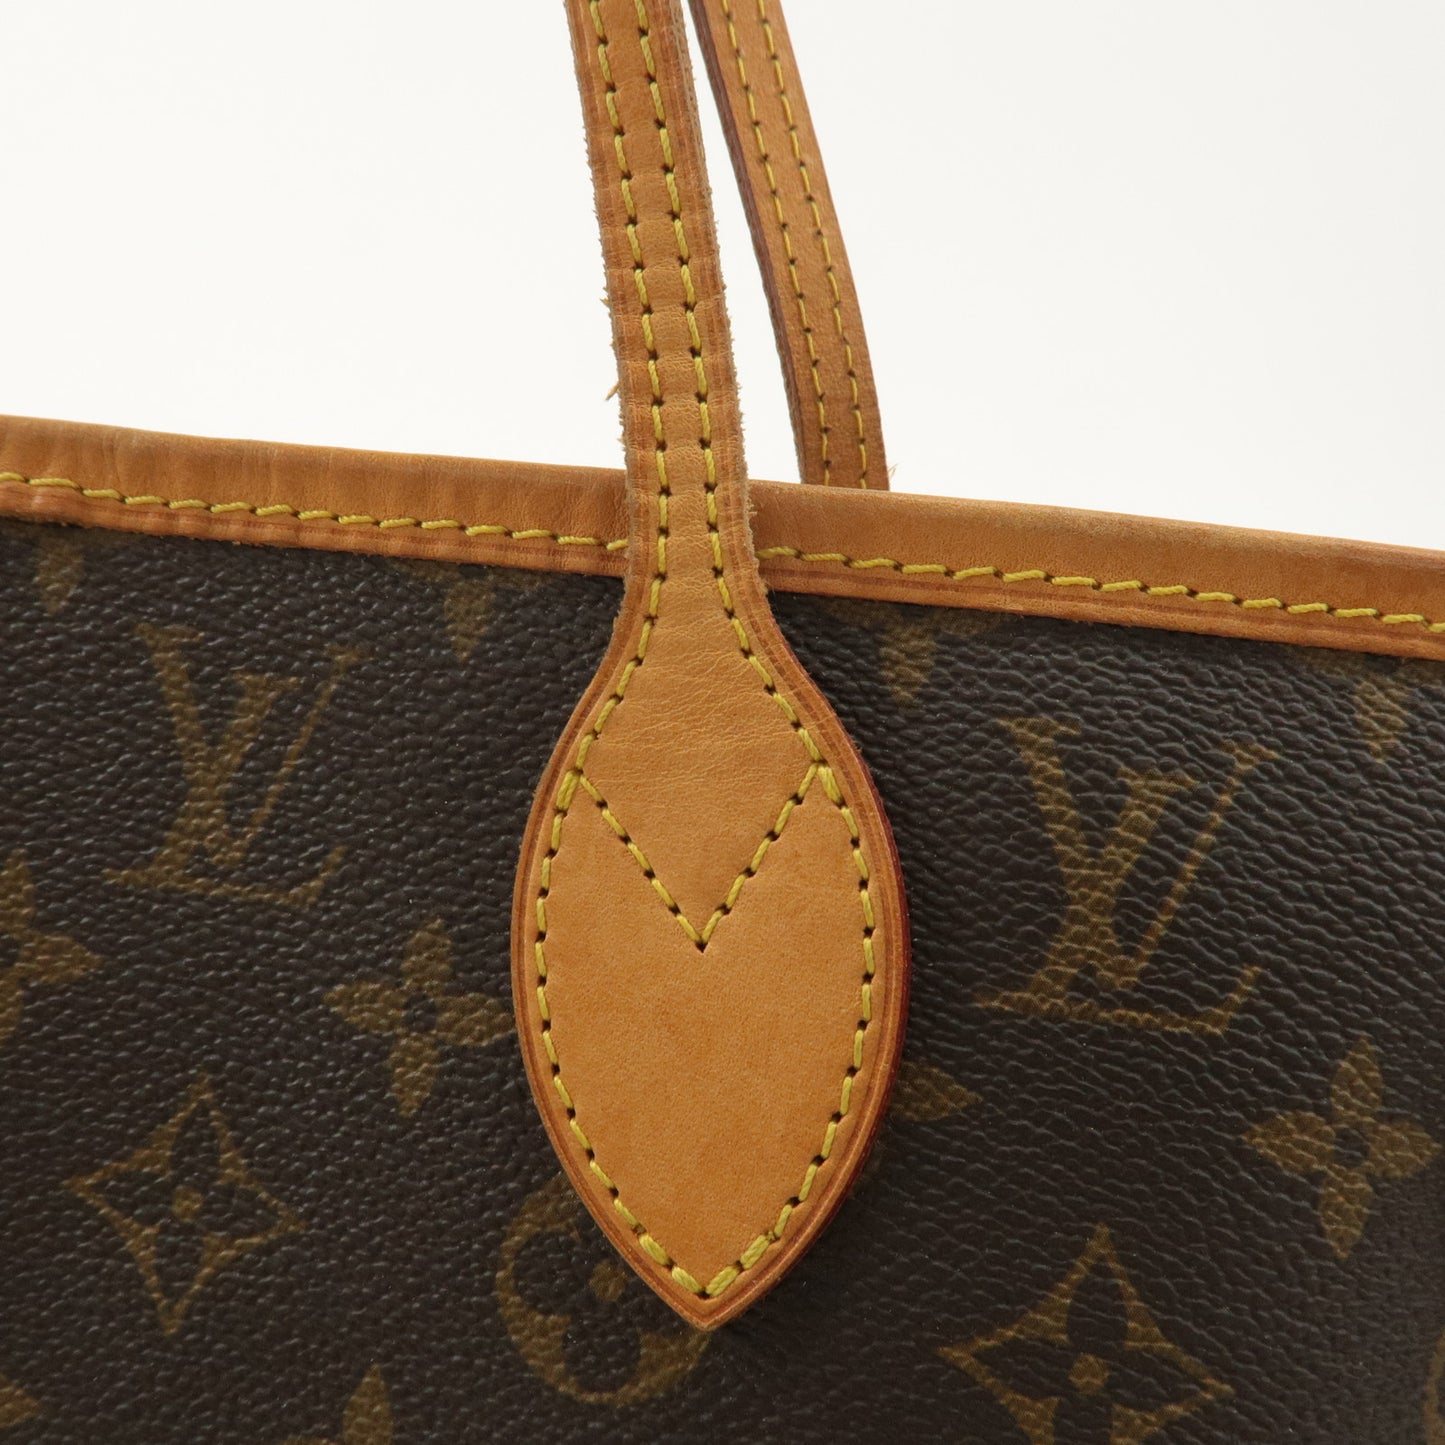 Louis Vuitton Monogram Neverfull MM Tote Bag Brown M40995